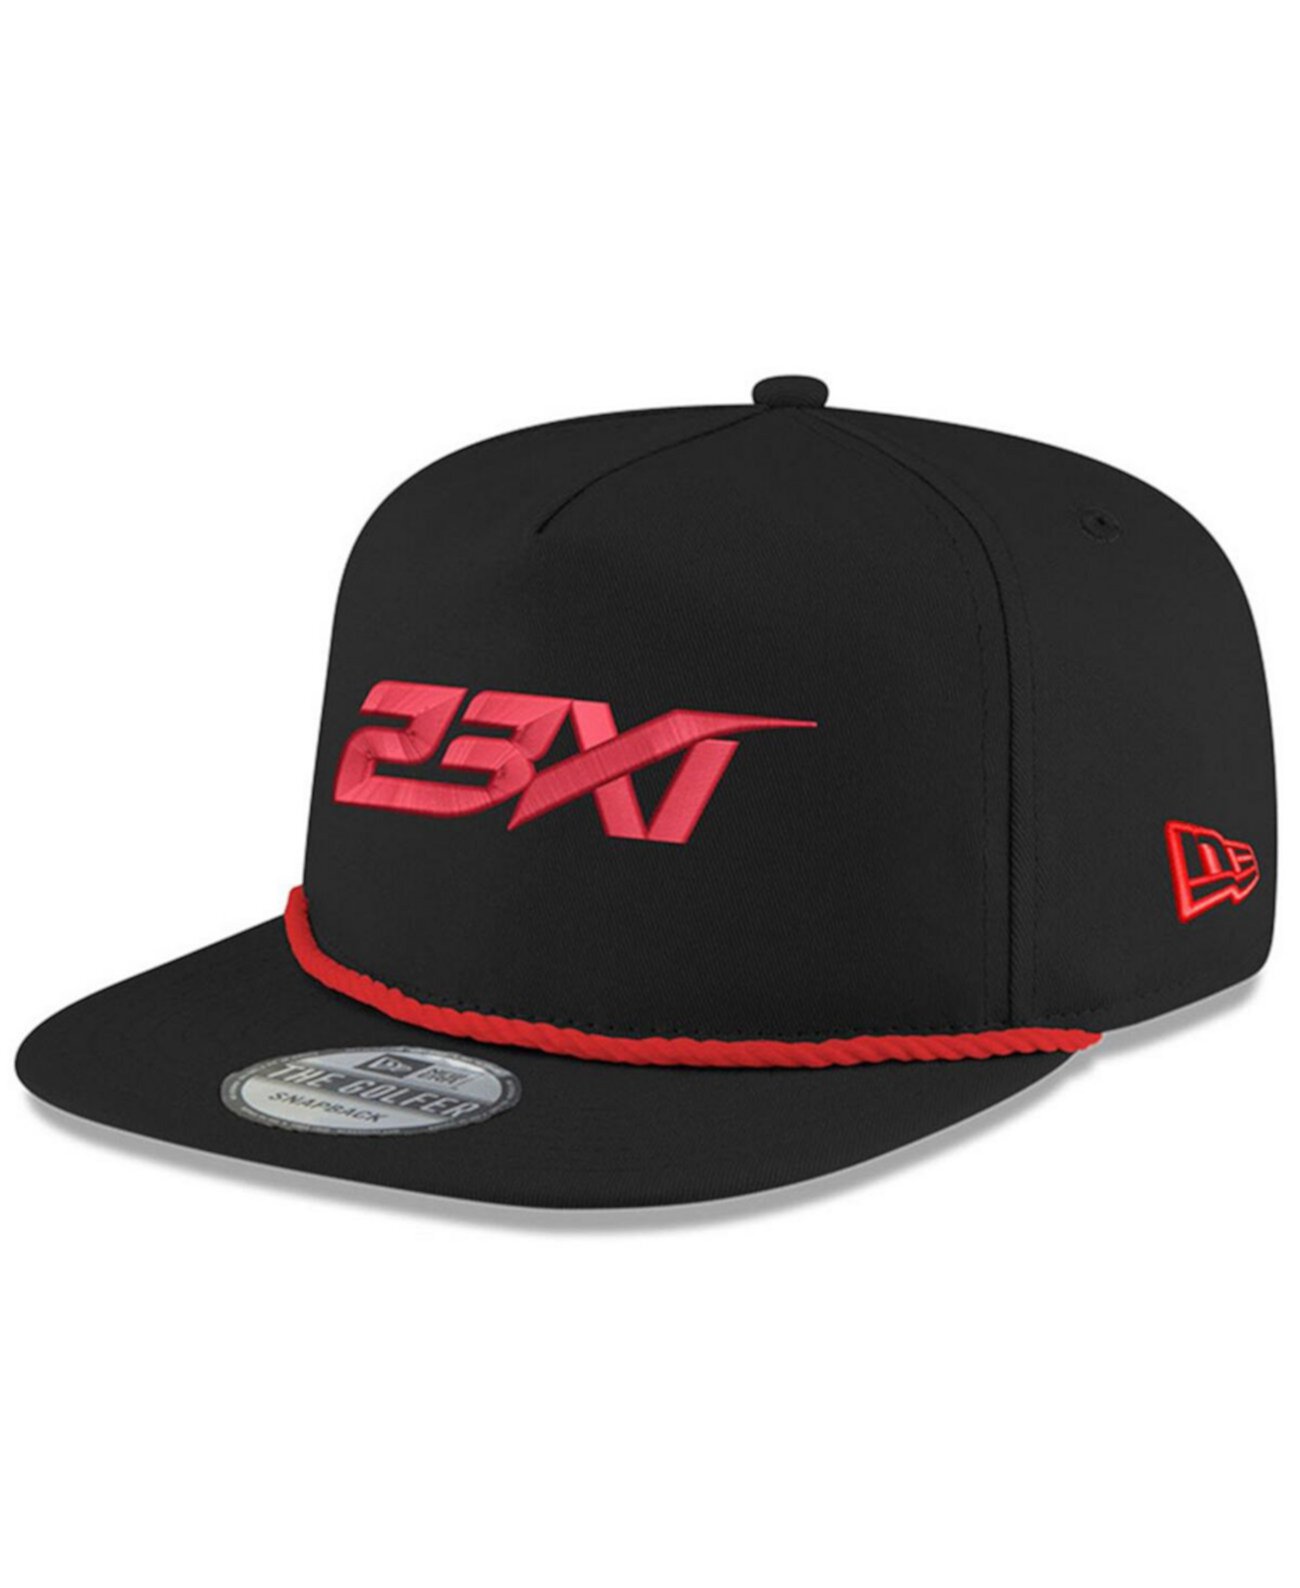 Men's Black 23XI Racing Golfer Snapback Hat 23xi Racing